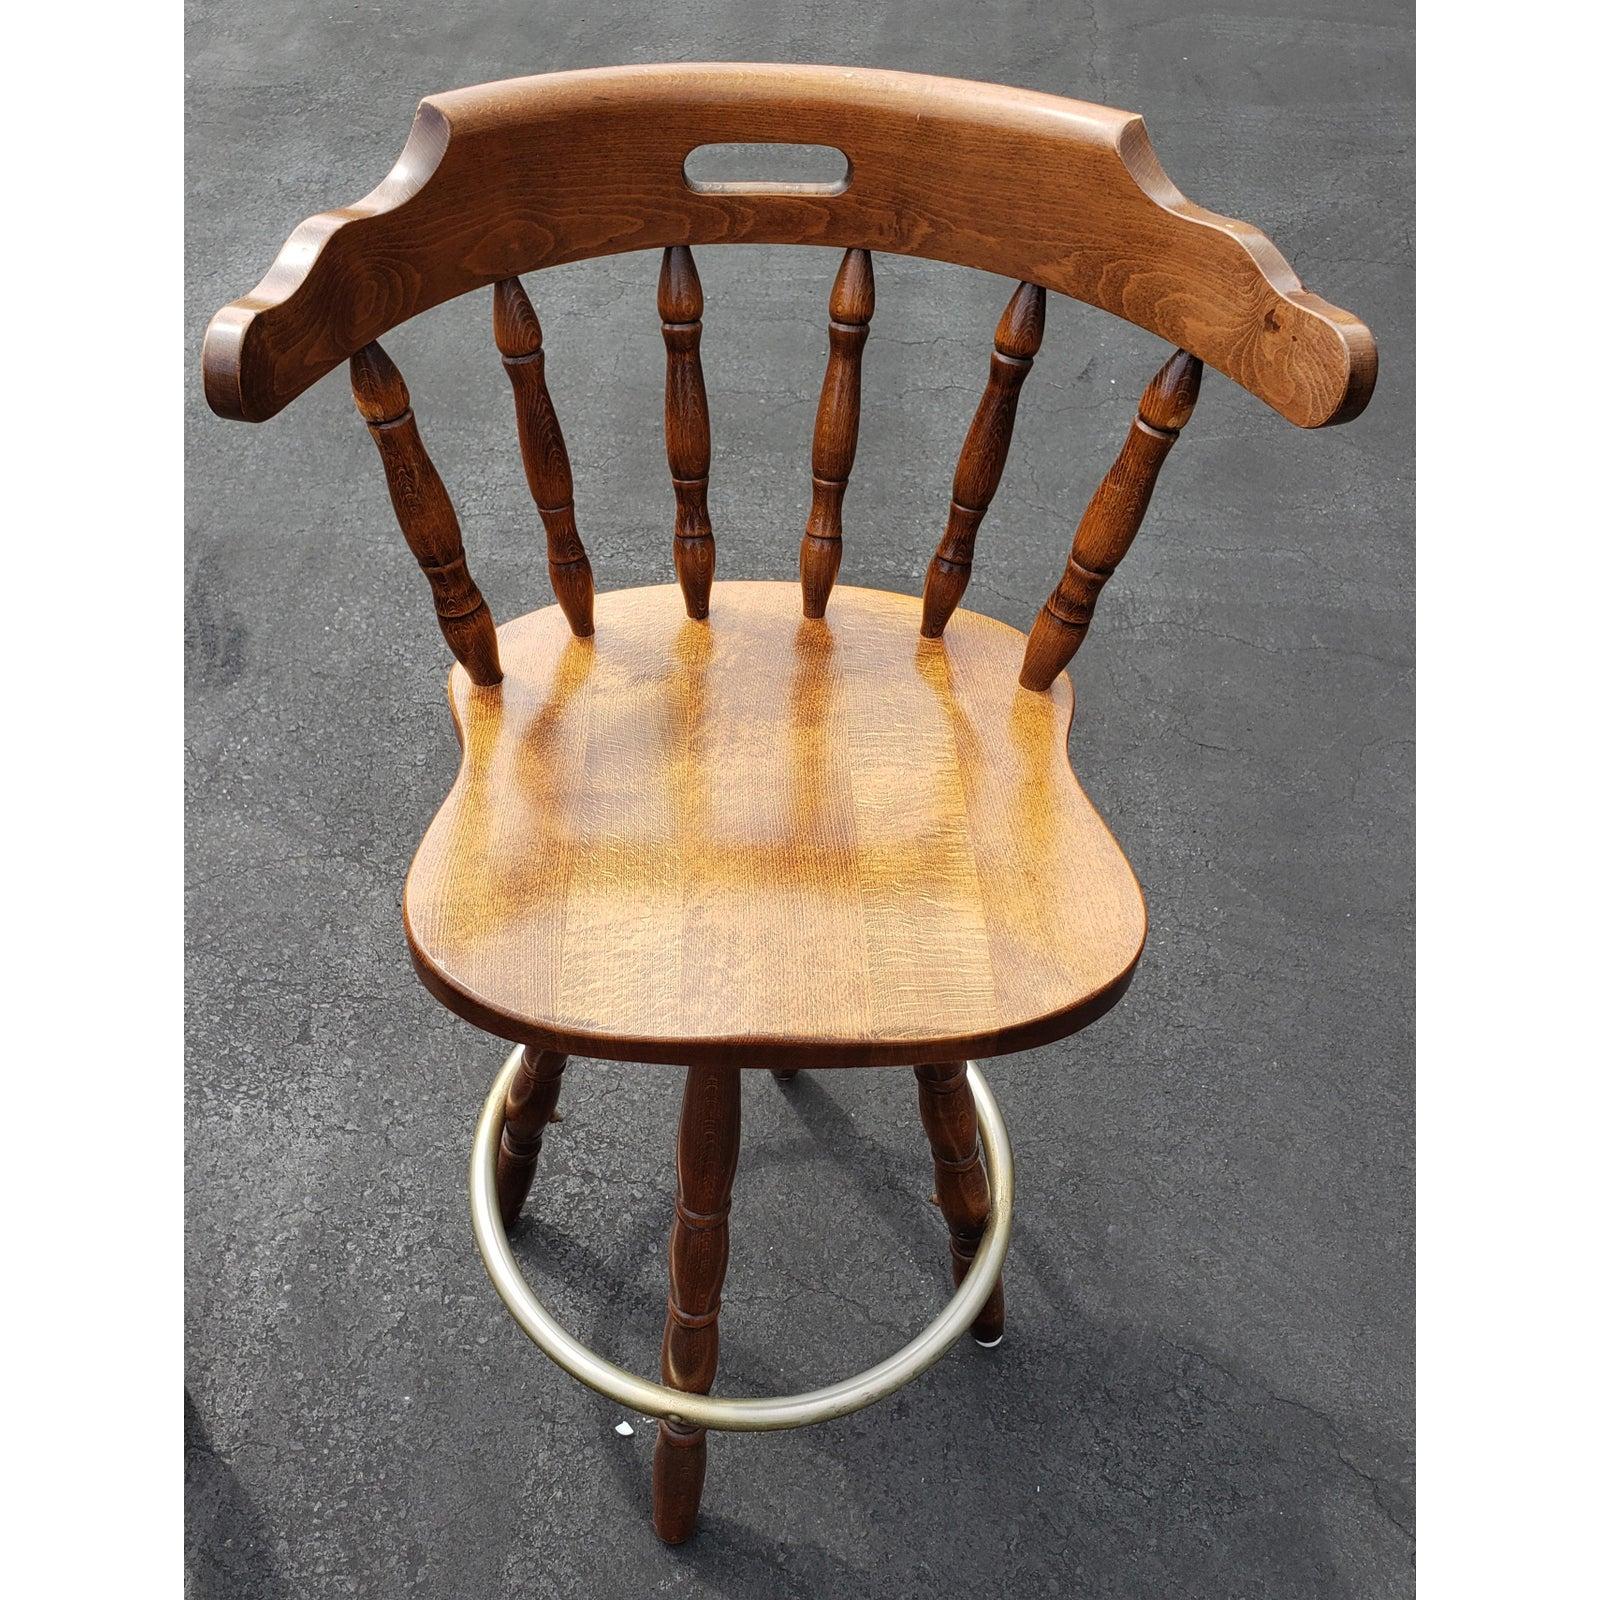 vintage wooden bar stools with backs